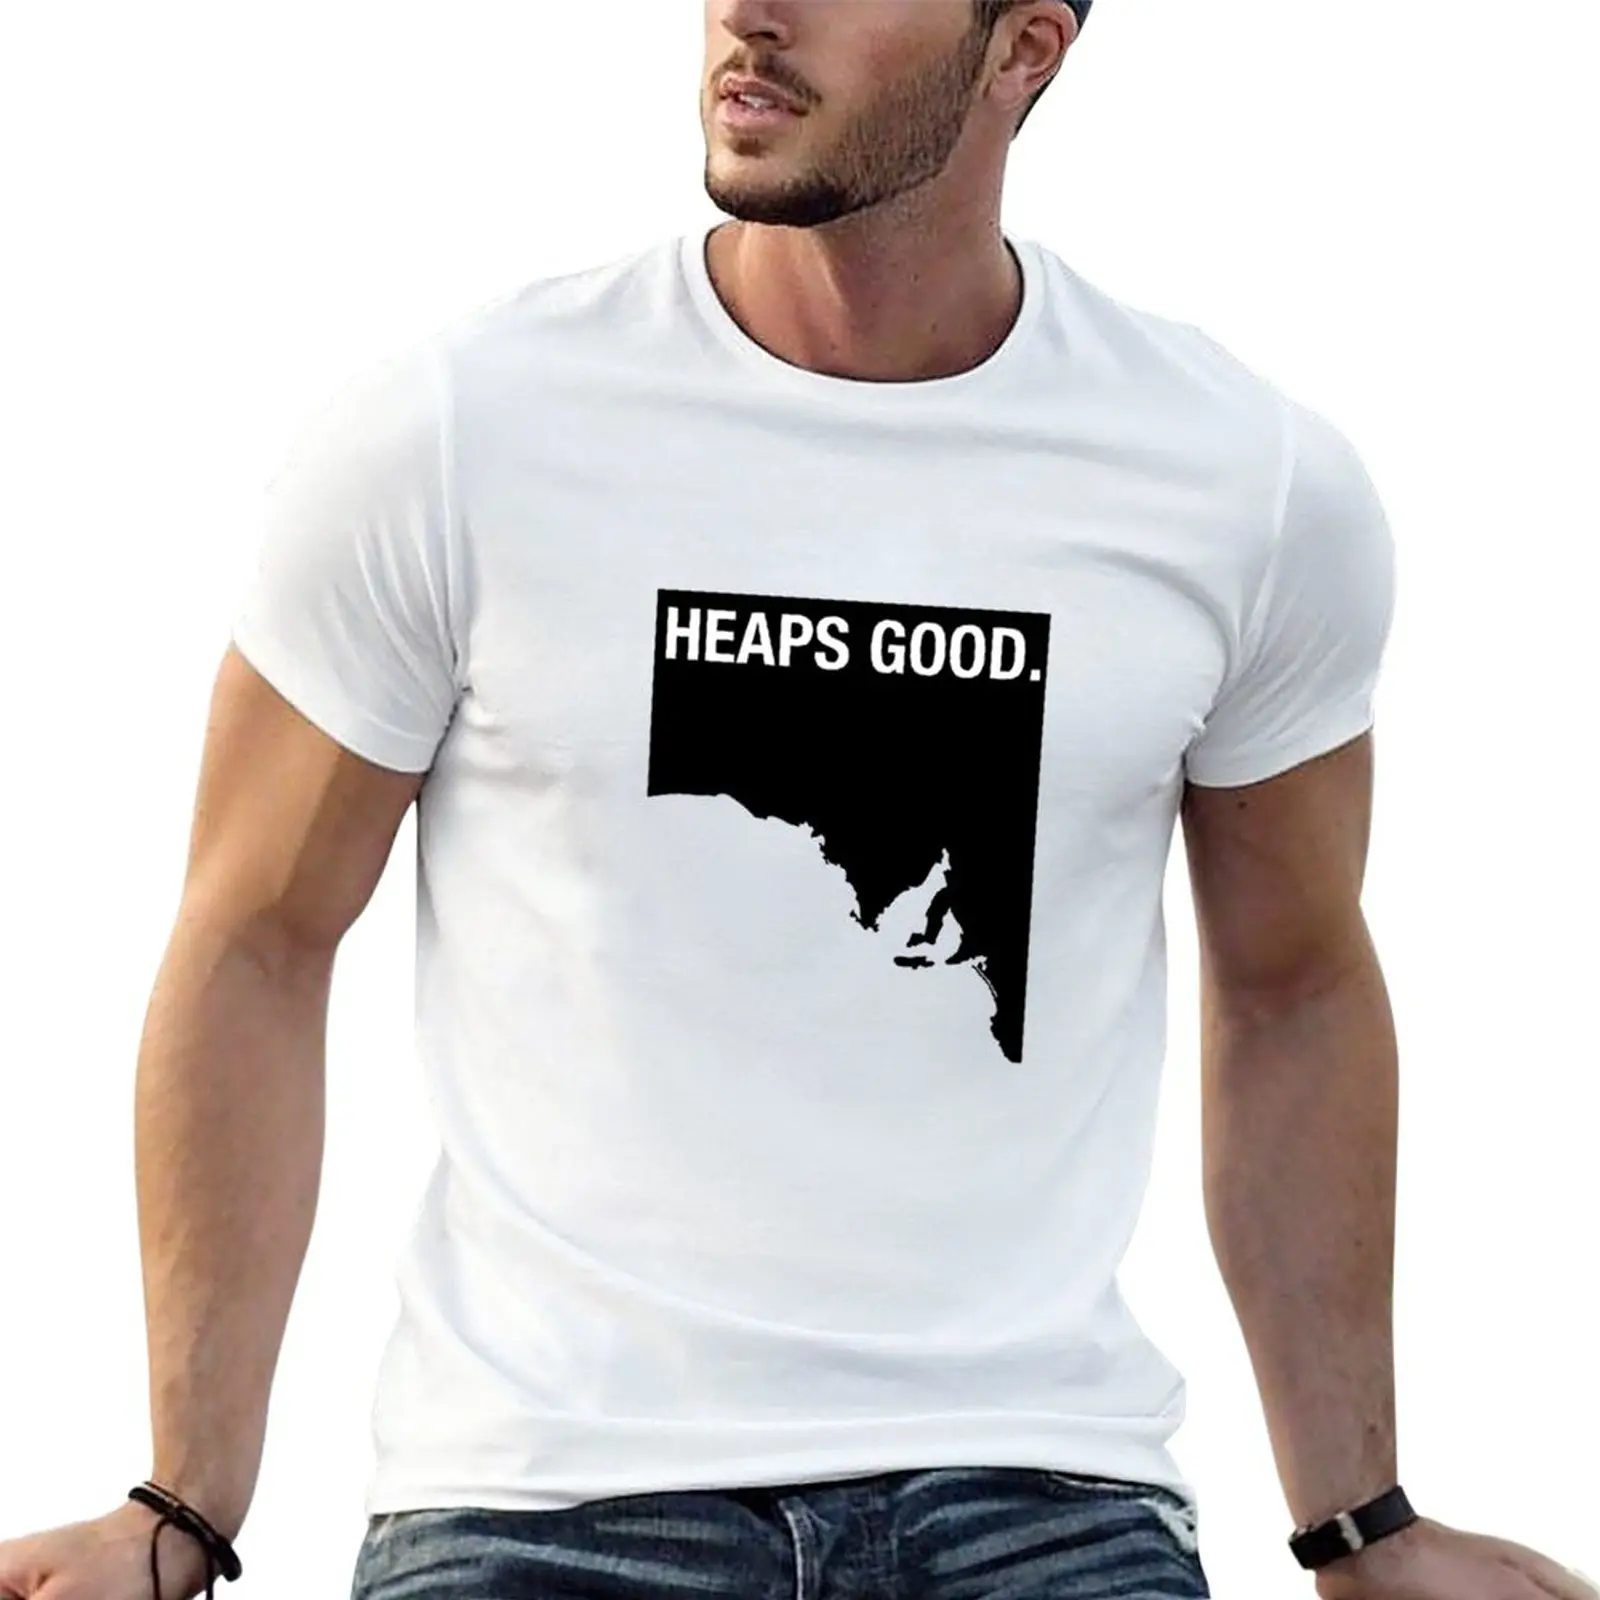 

New Best Selling - Heaps Good Merchandise T-Shirt T-Shirt new edition t shirt summer clothes T-shirts for men cotton